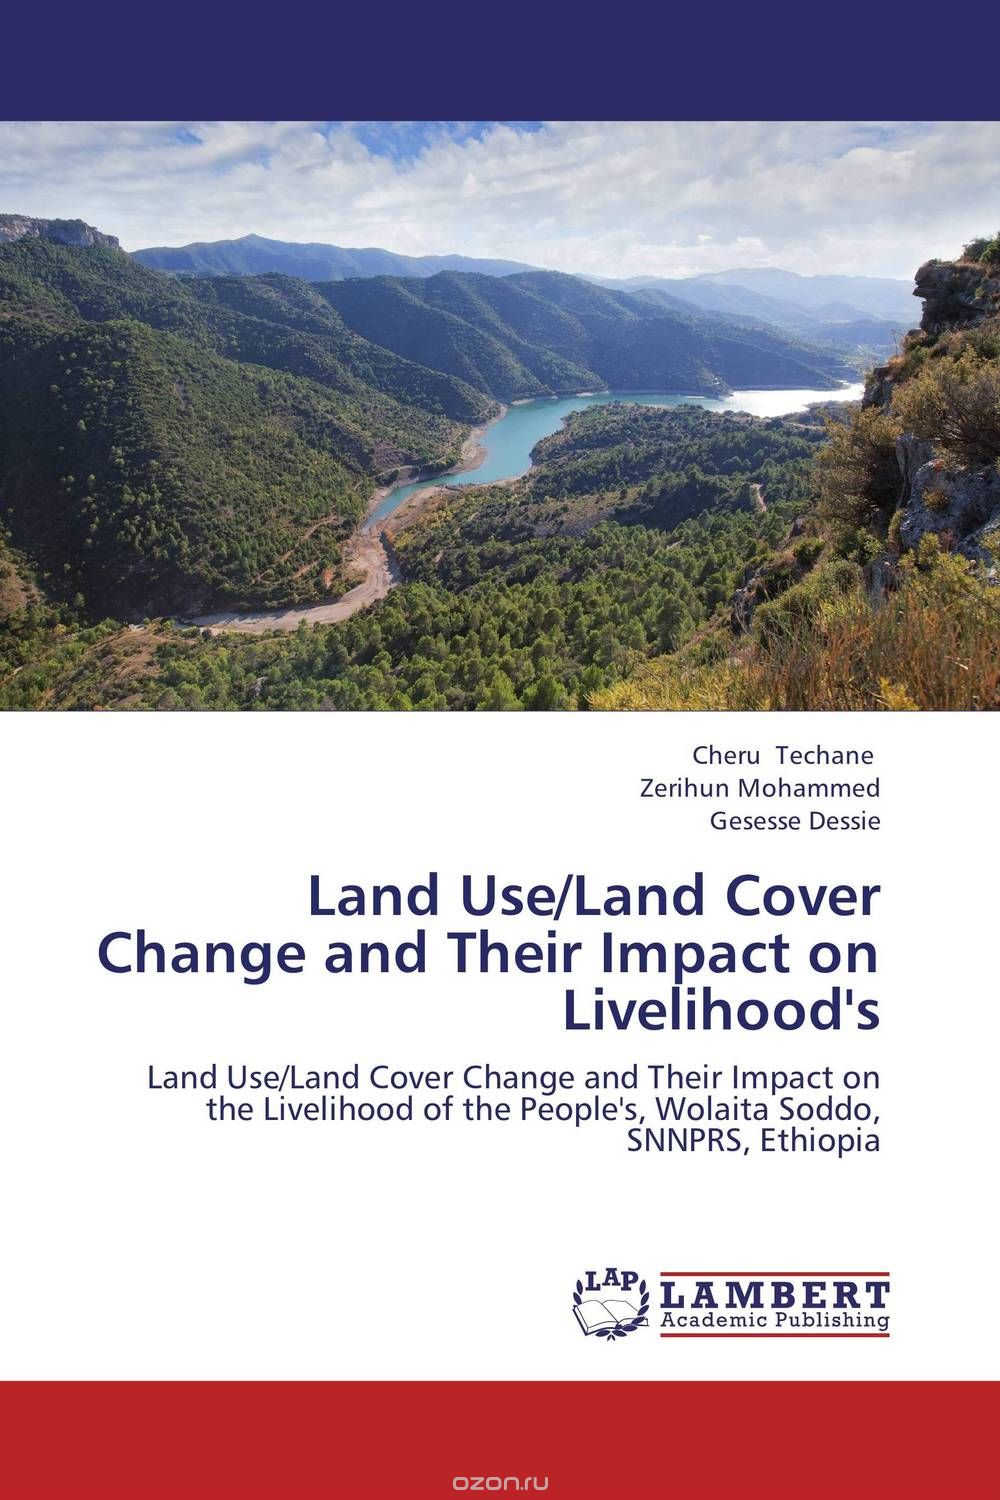 Скачать книгу "Land Use/Land Cover Change and Their Impact on Livelihood's"